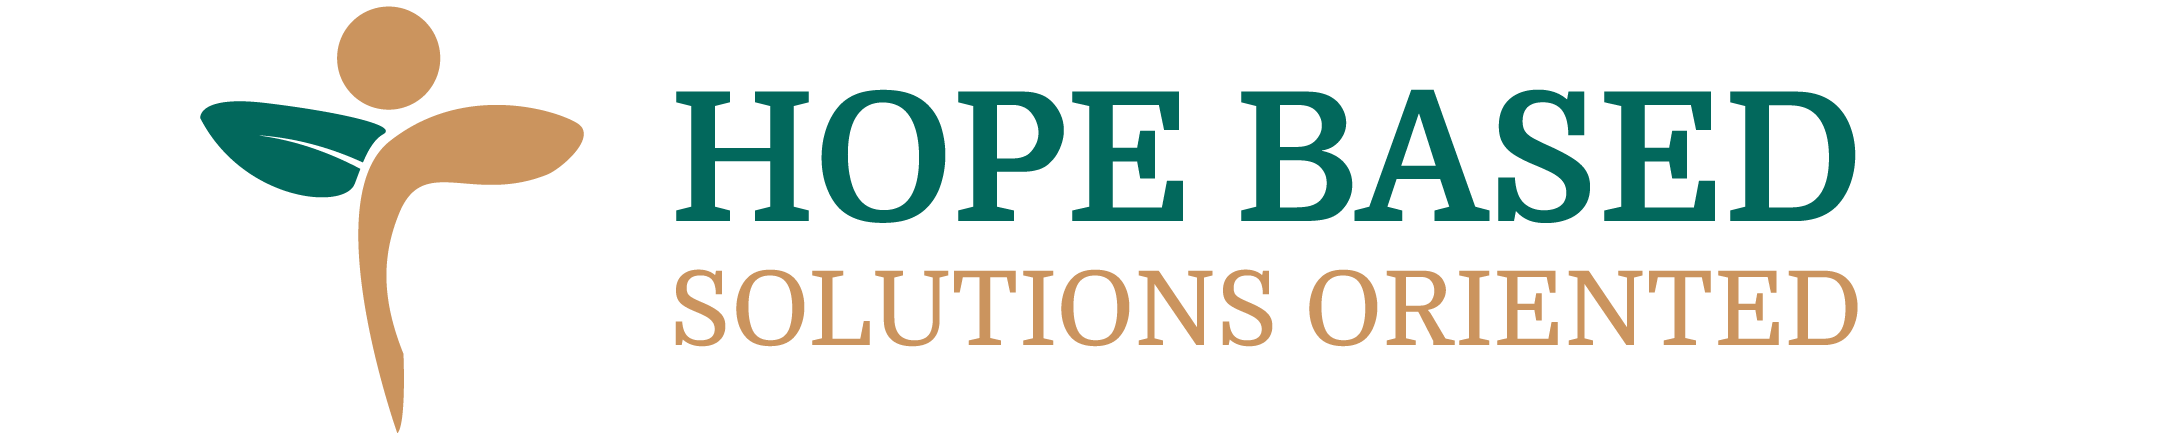 Hope Based Solutions Journalism